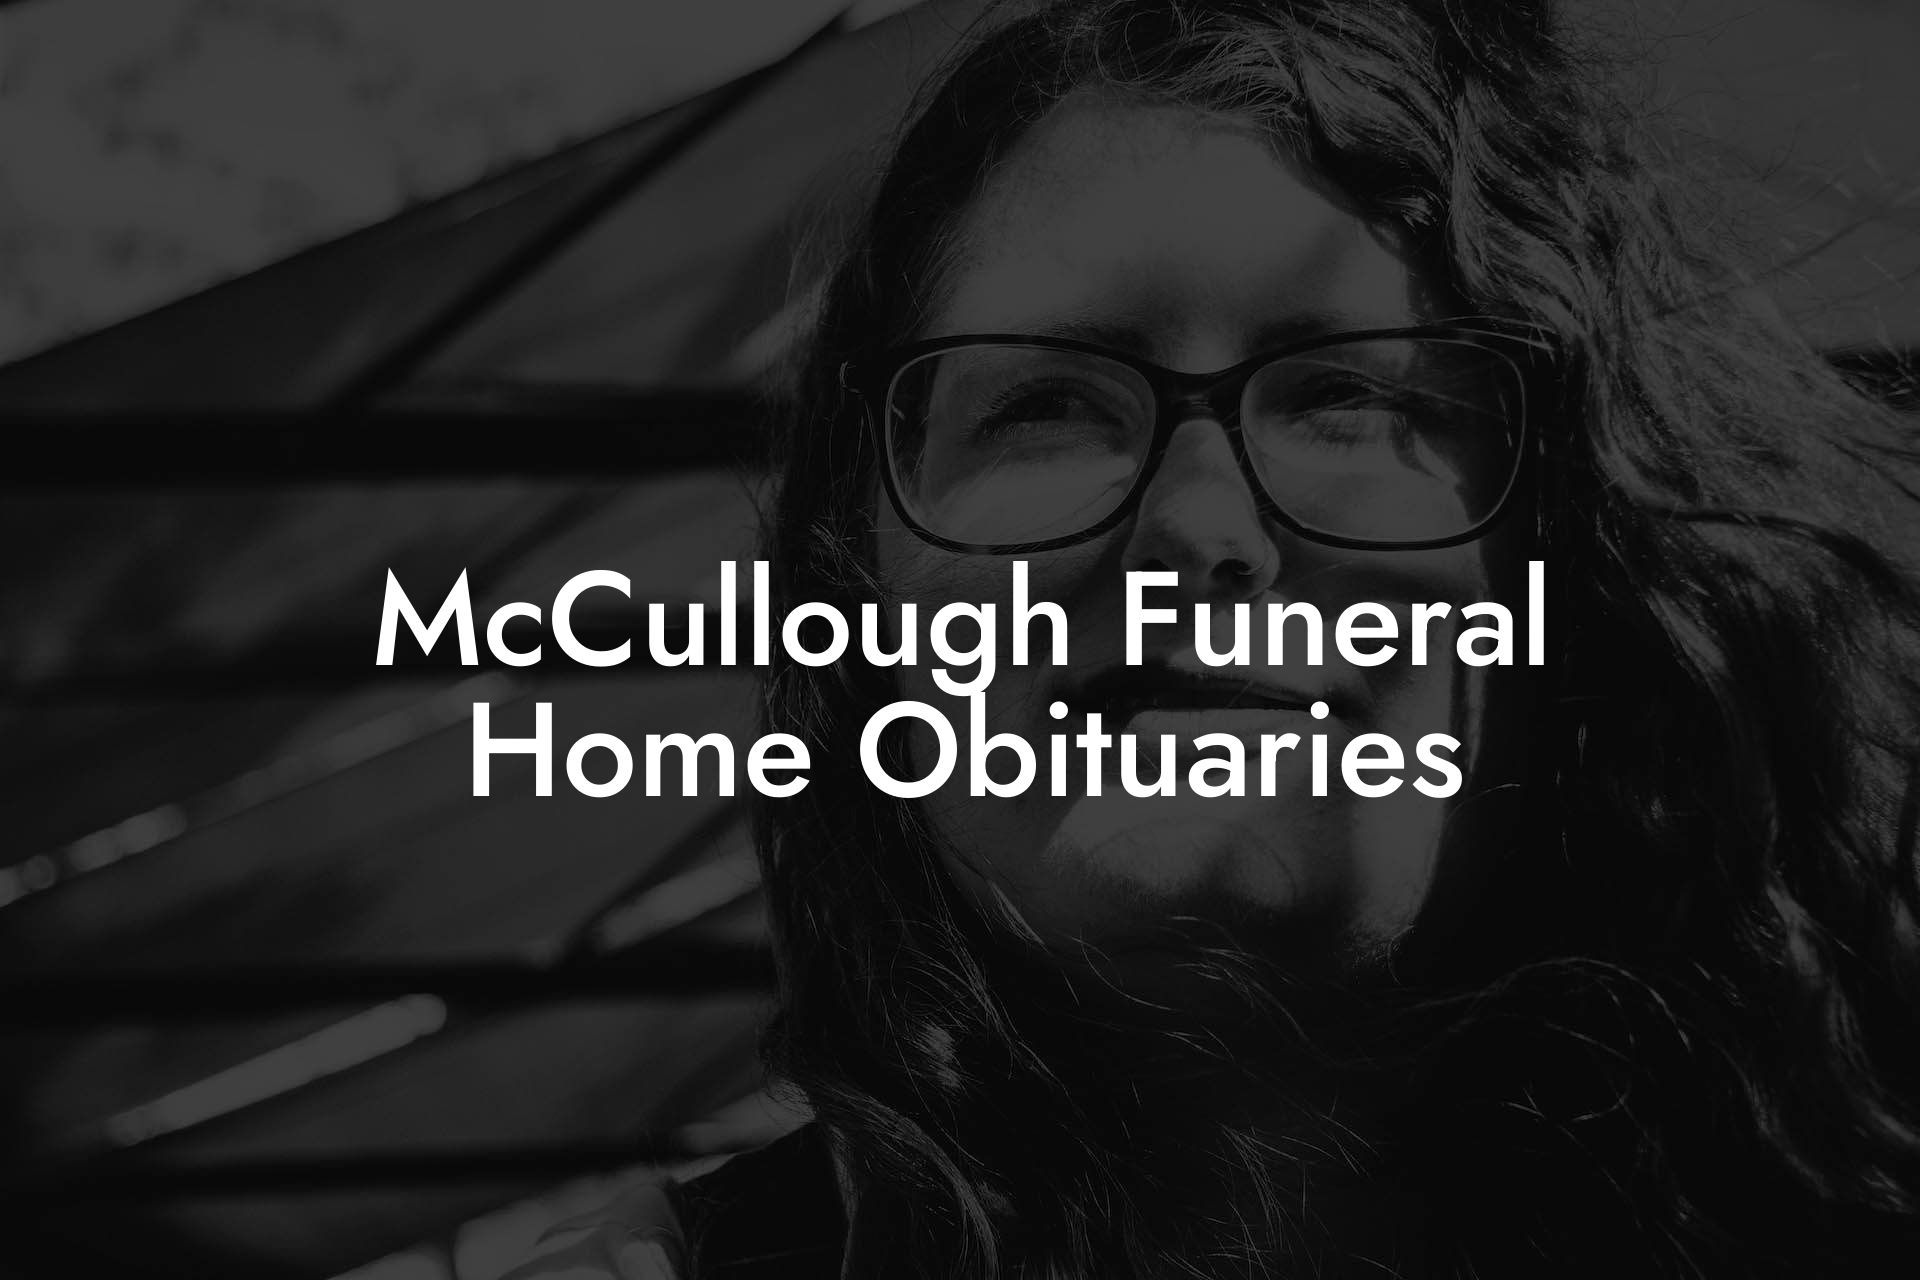 McCullough Funeral Home Obituaries